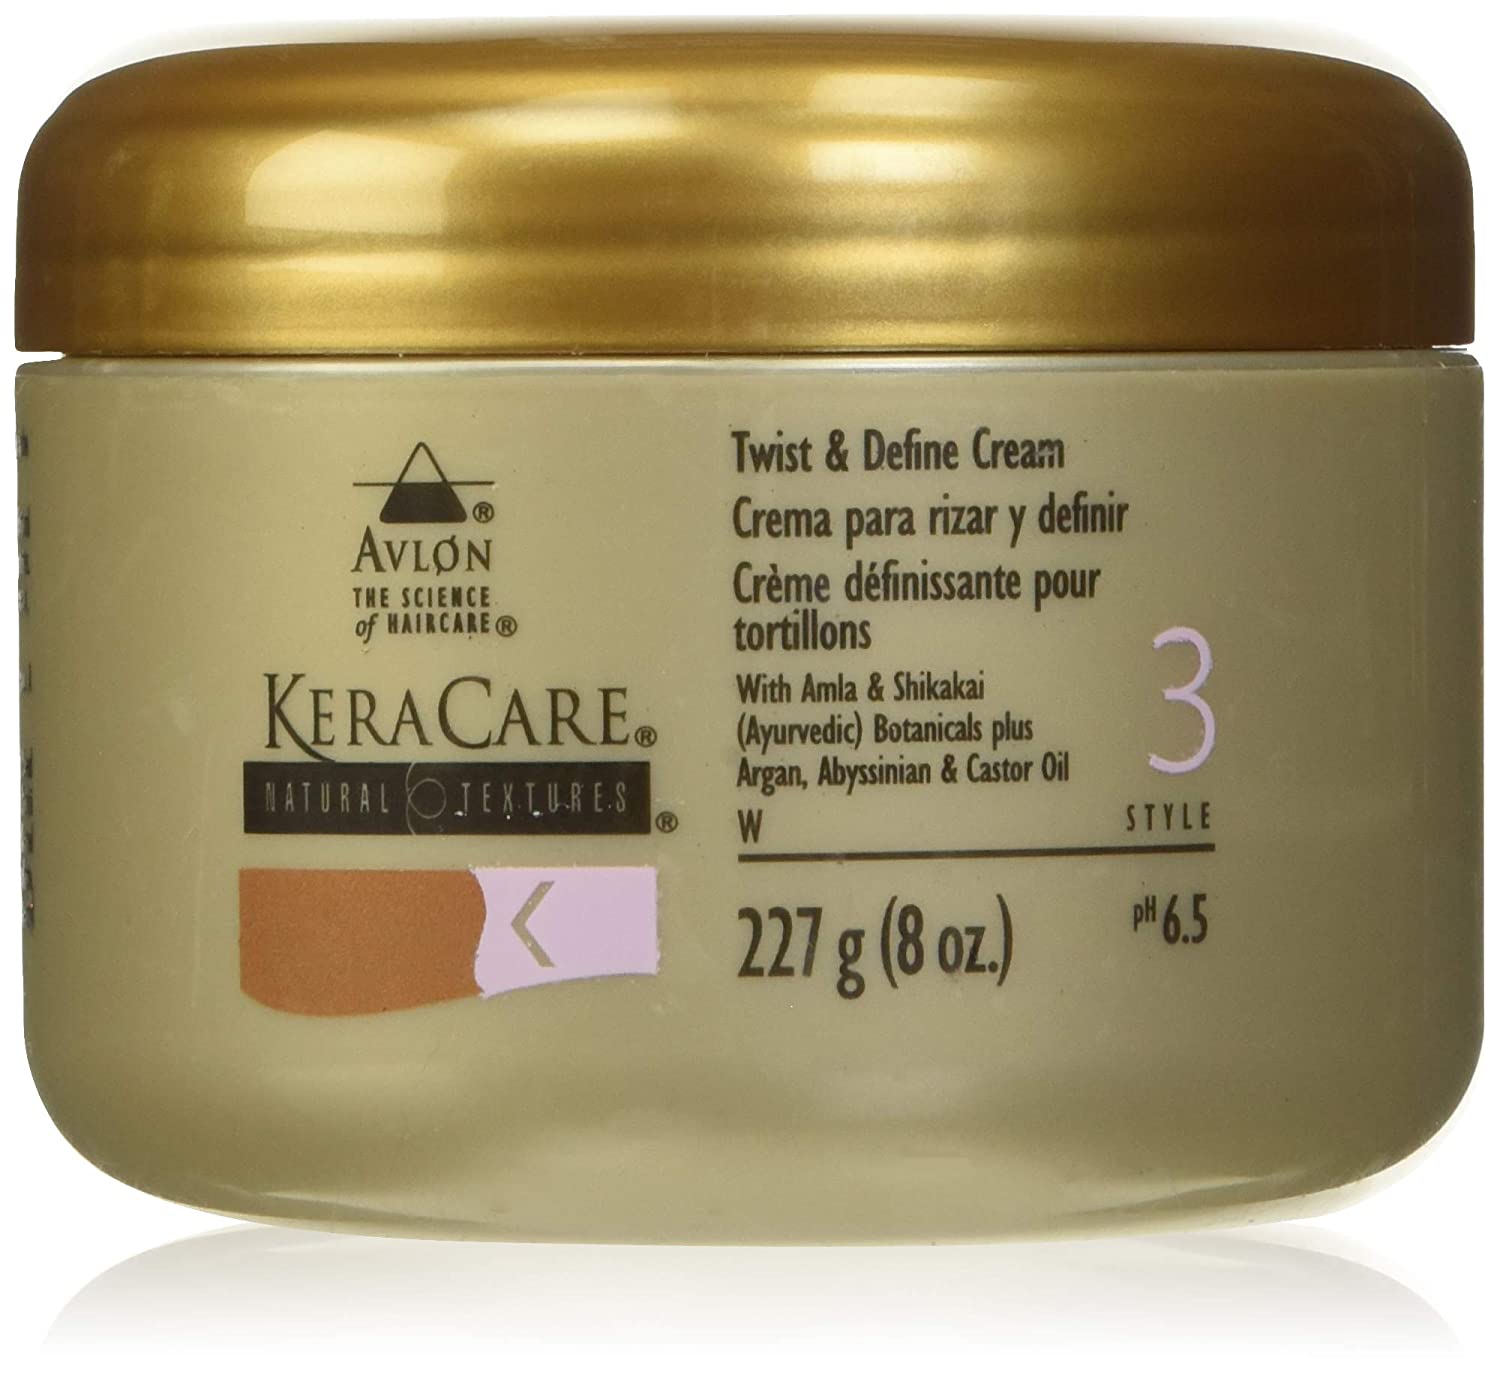 KeraCare Natural Textures Twist & Define Cream